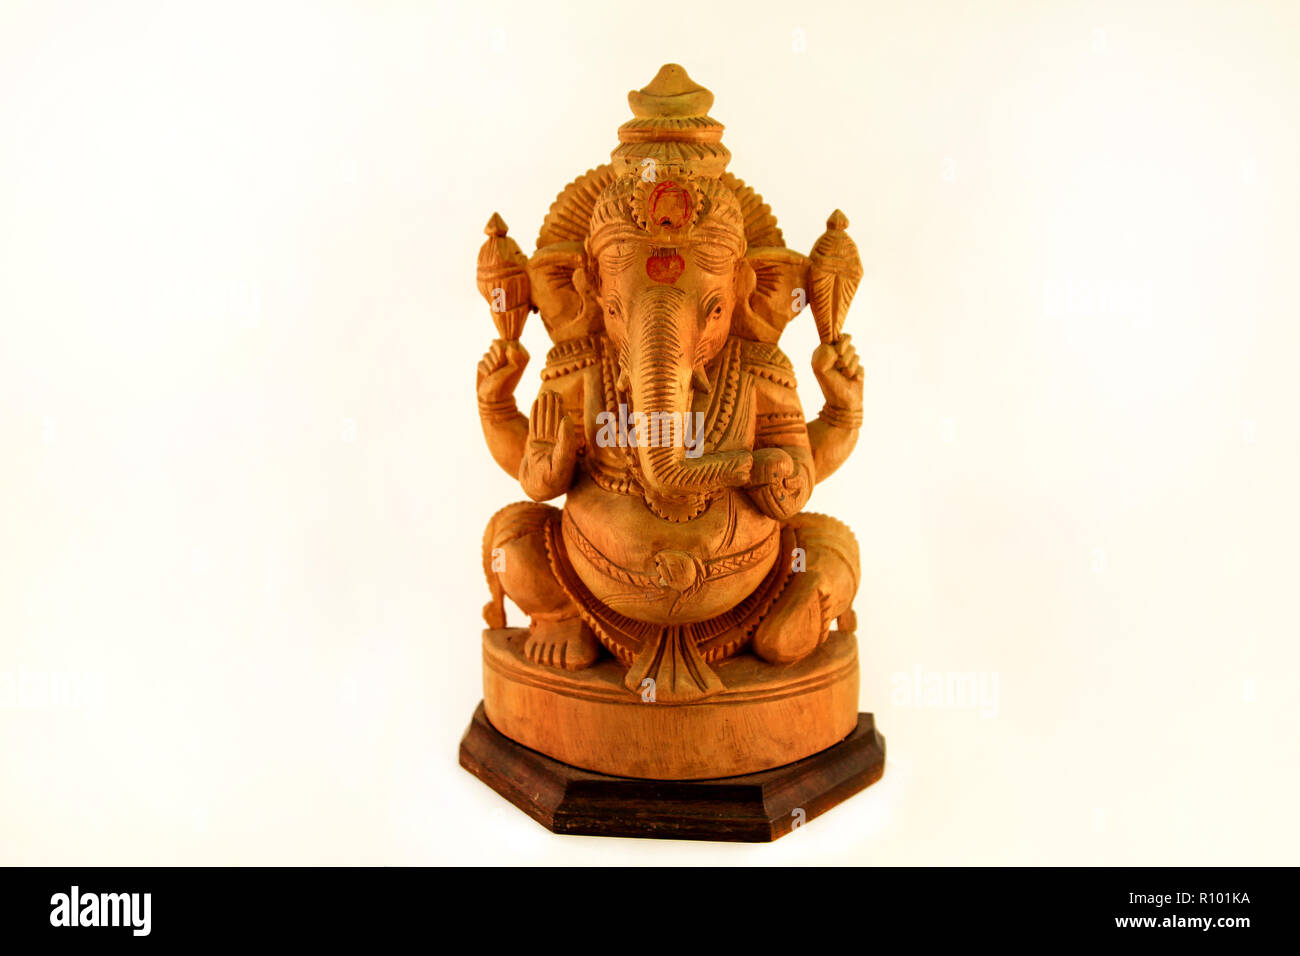 Lord Ganesh / Figurine Sri Ganesha / Indian religion statue on isolated ...